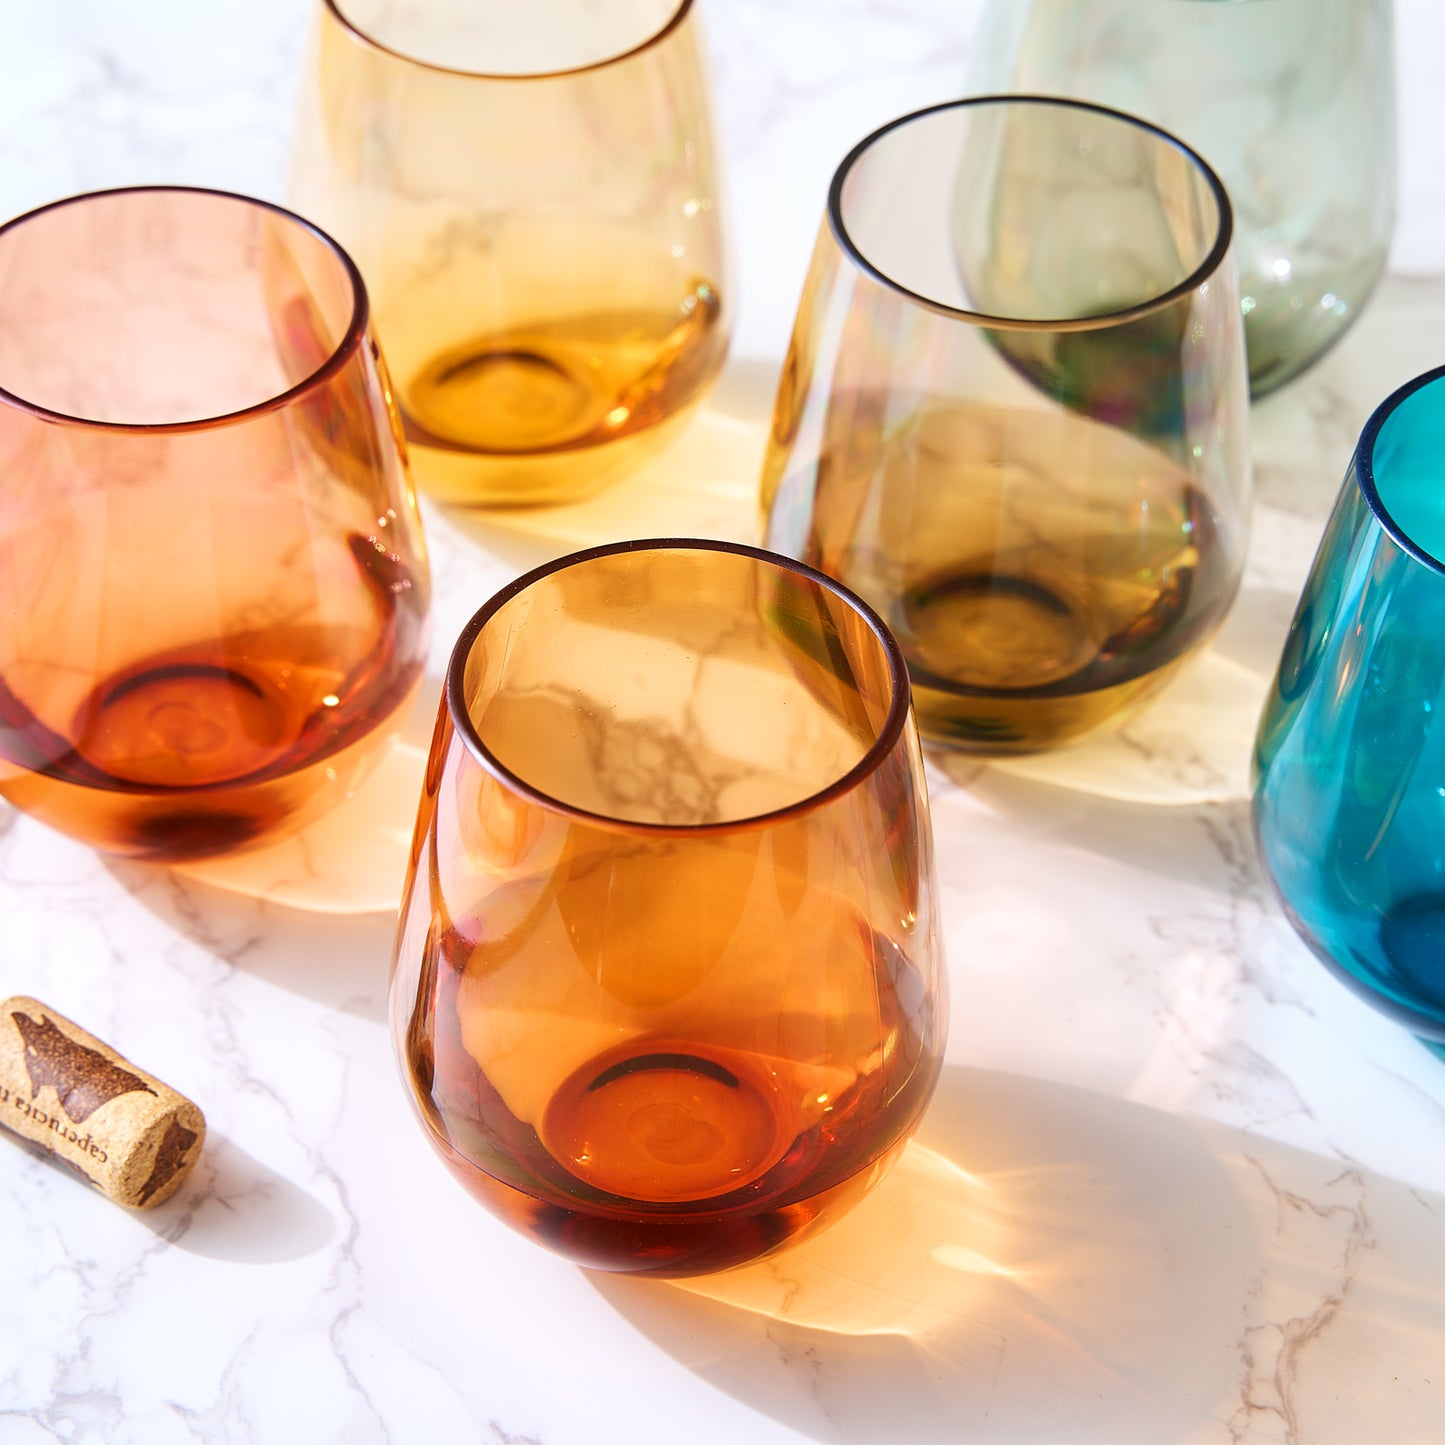 Eze Stemless Wine Glassware, Unbreakable Acrylic, Set of 6